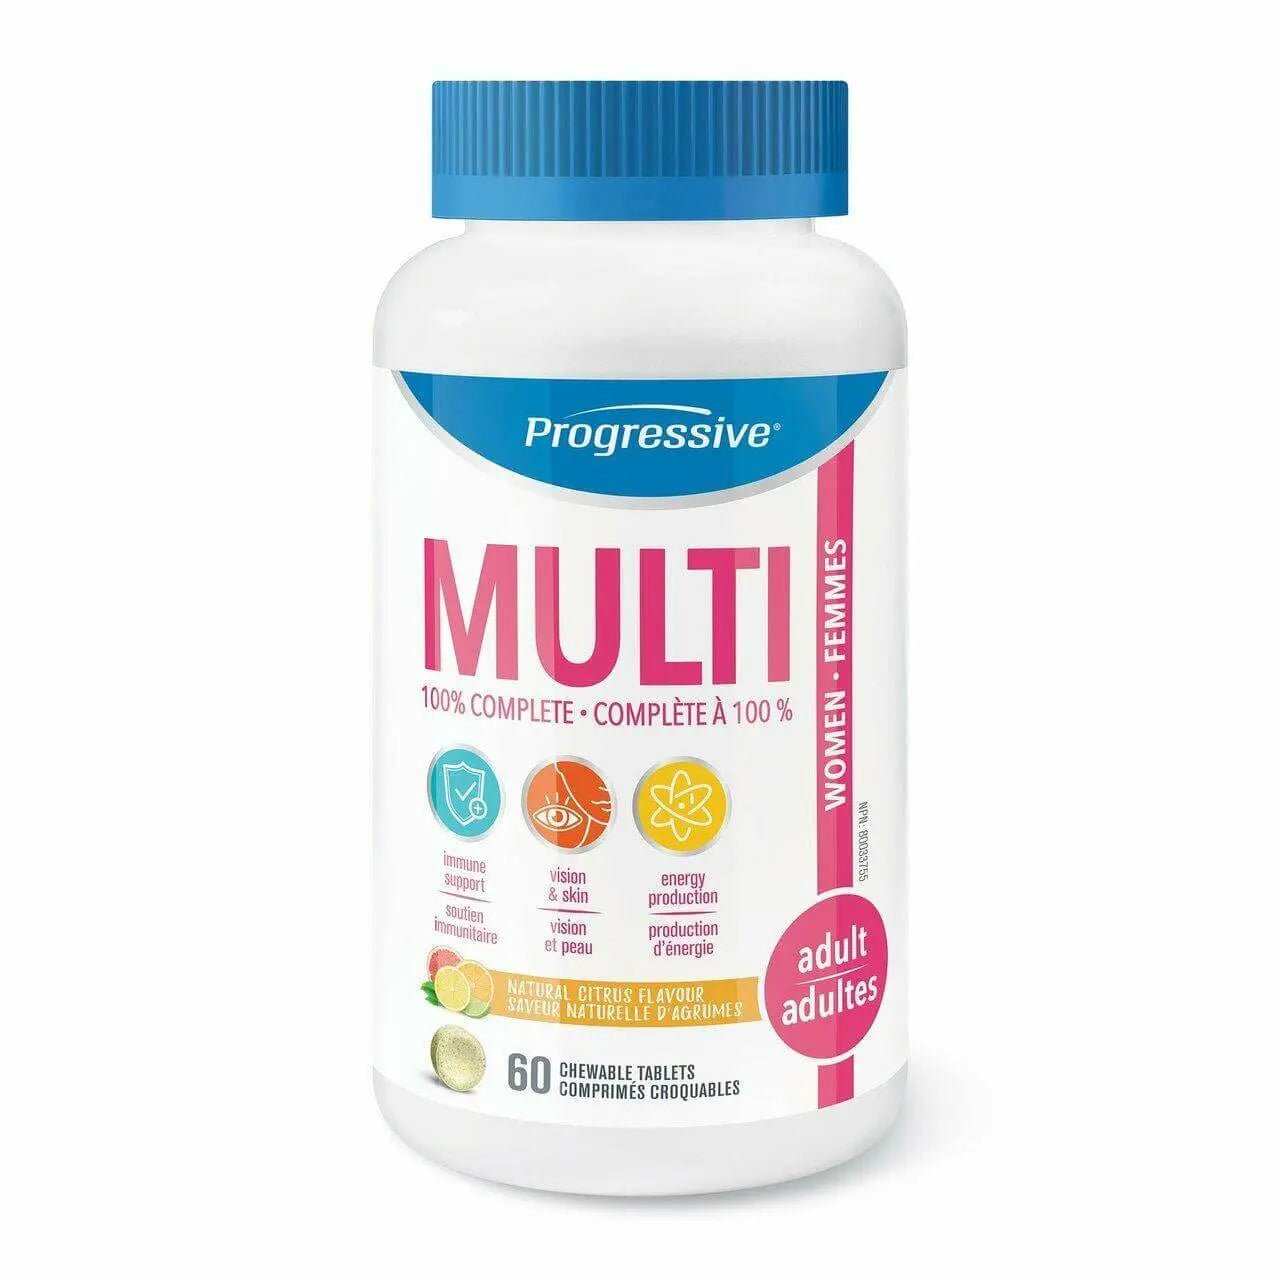 Progressive Multivitamin for Adult Women 60 Chewable Tablets - Nutrition Plus